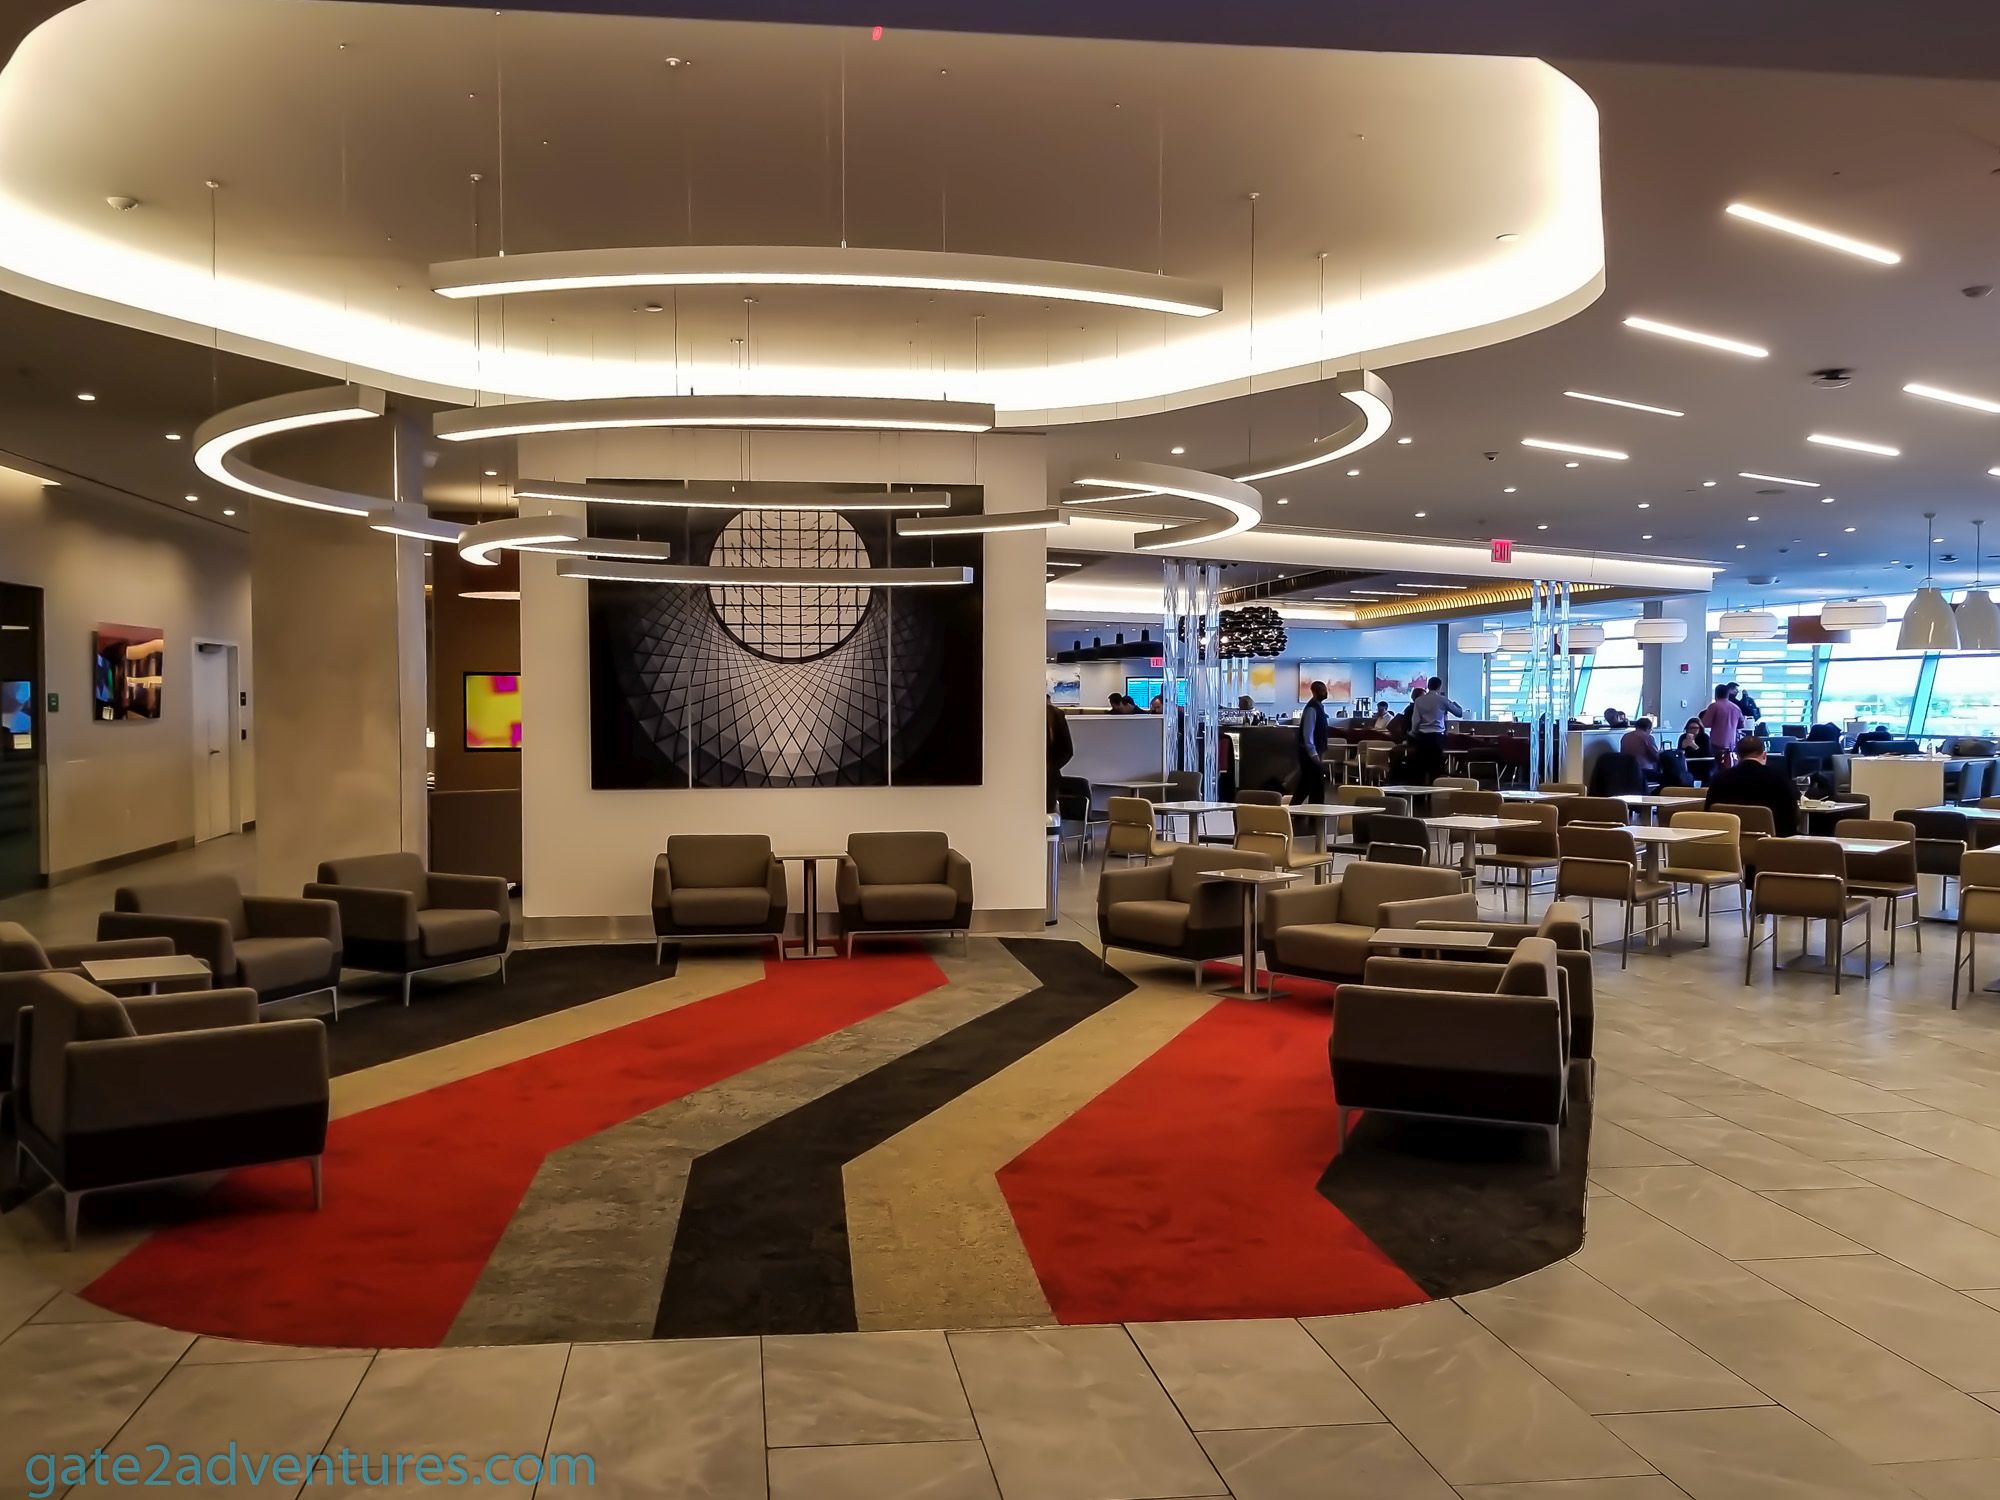 Lounge Review: American Airlines Flagship Lounge New York JFK (JFK) – Terminal 8